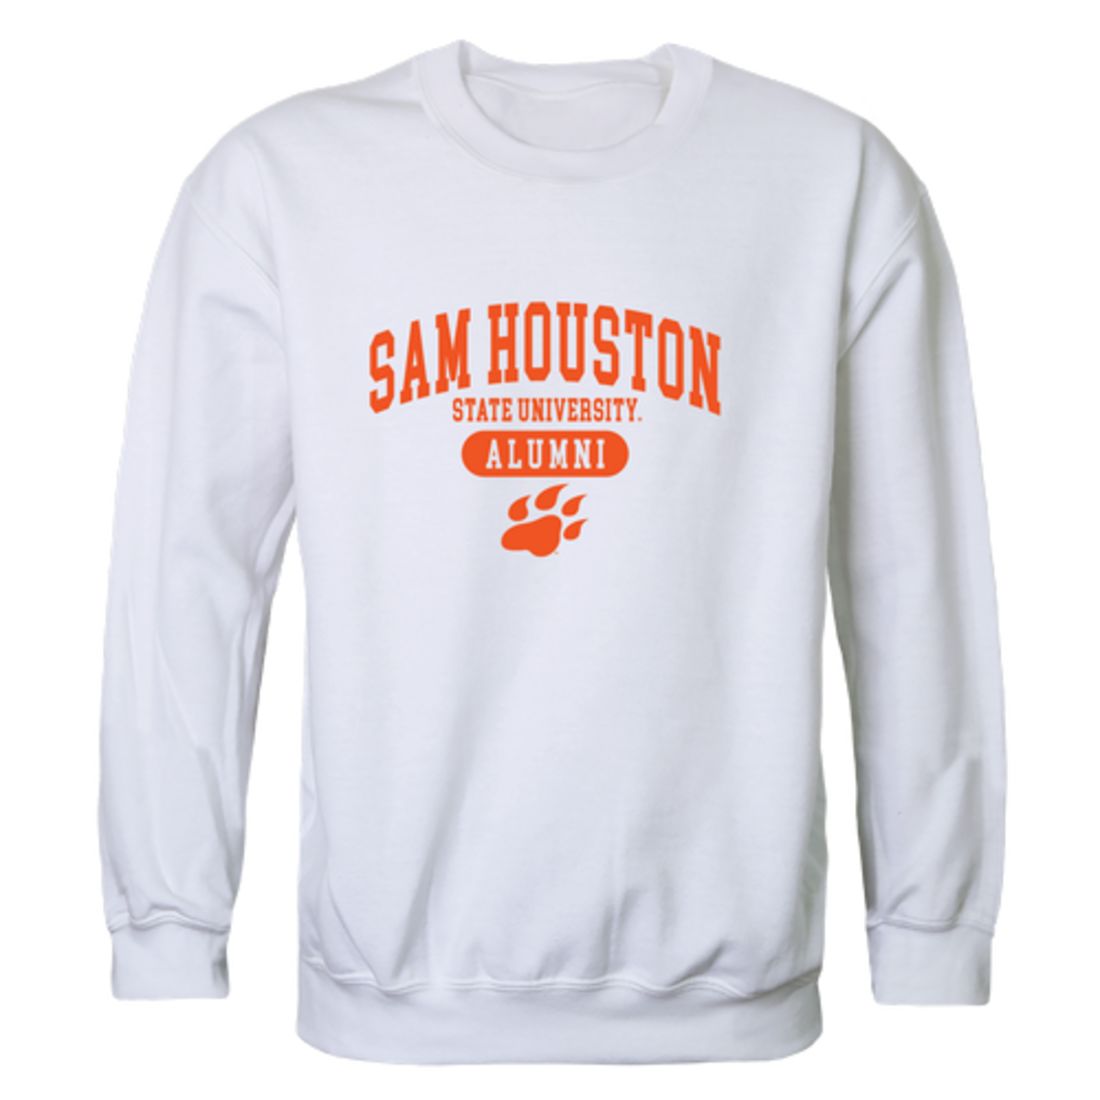 Sam Houston State University Bearkat Alumni Fleece Crewneck Pullover Sweatshirt Heather Charcoal-Campus-Wardrobe